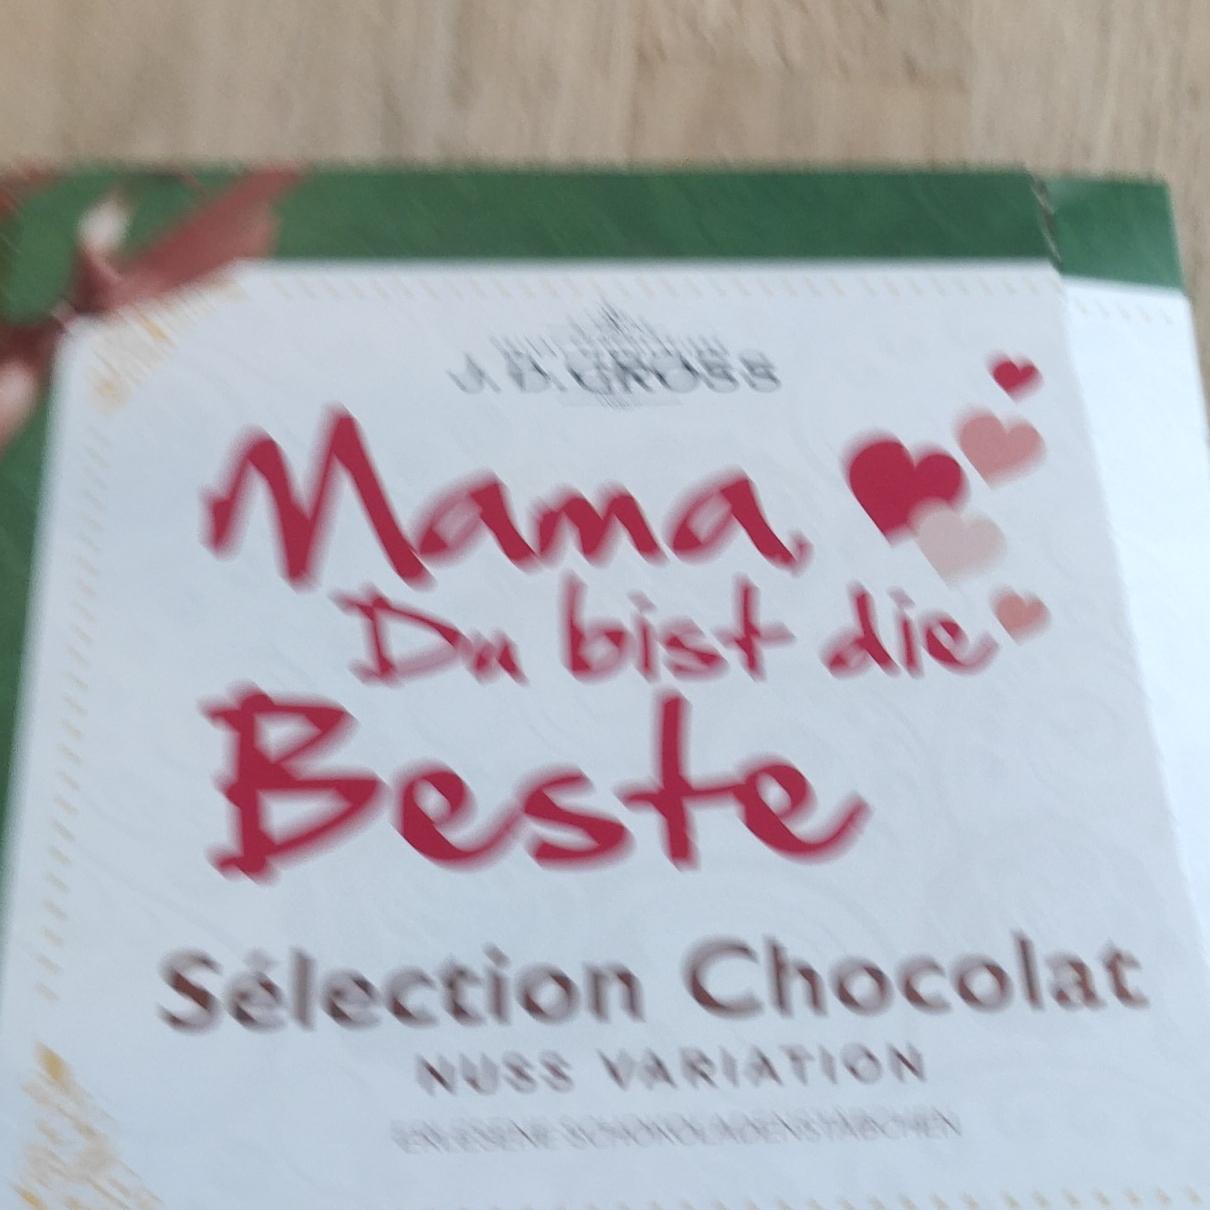 Фото - Mama, Du bist die Bestel Selection Chocolat Nuss Variation, Fairtrade Cocoa J. D. Gross